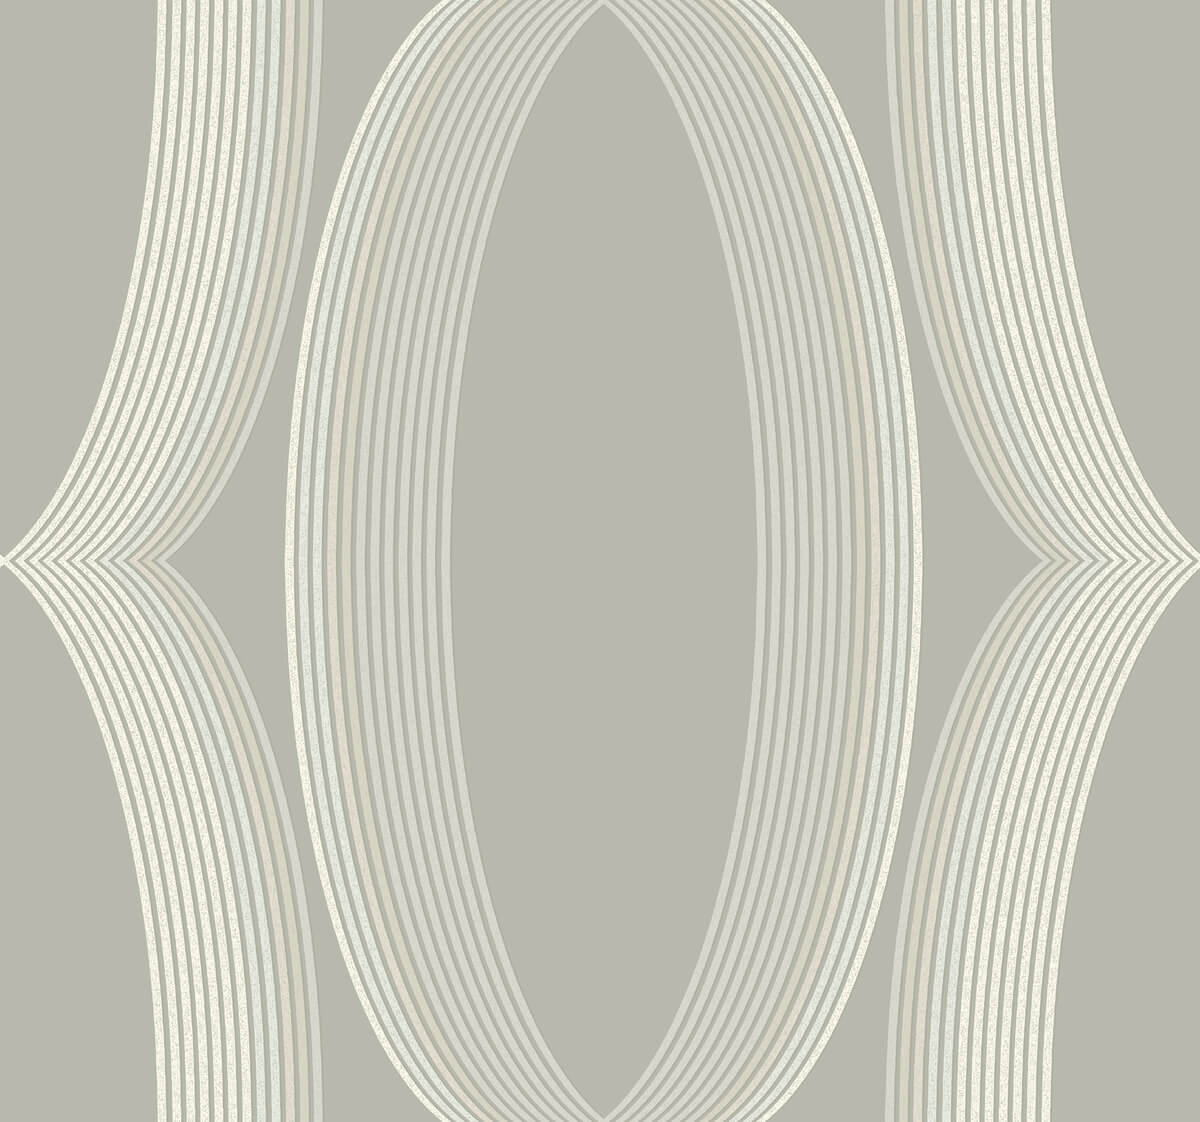 Candice Olson Casual Elegance Wallpaper - SAMPLE